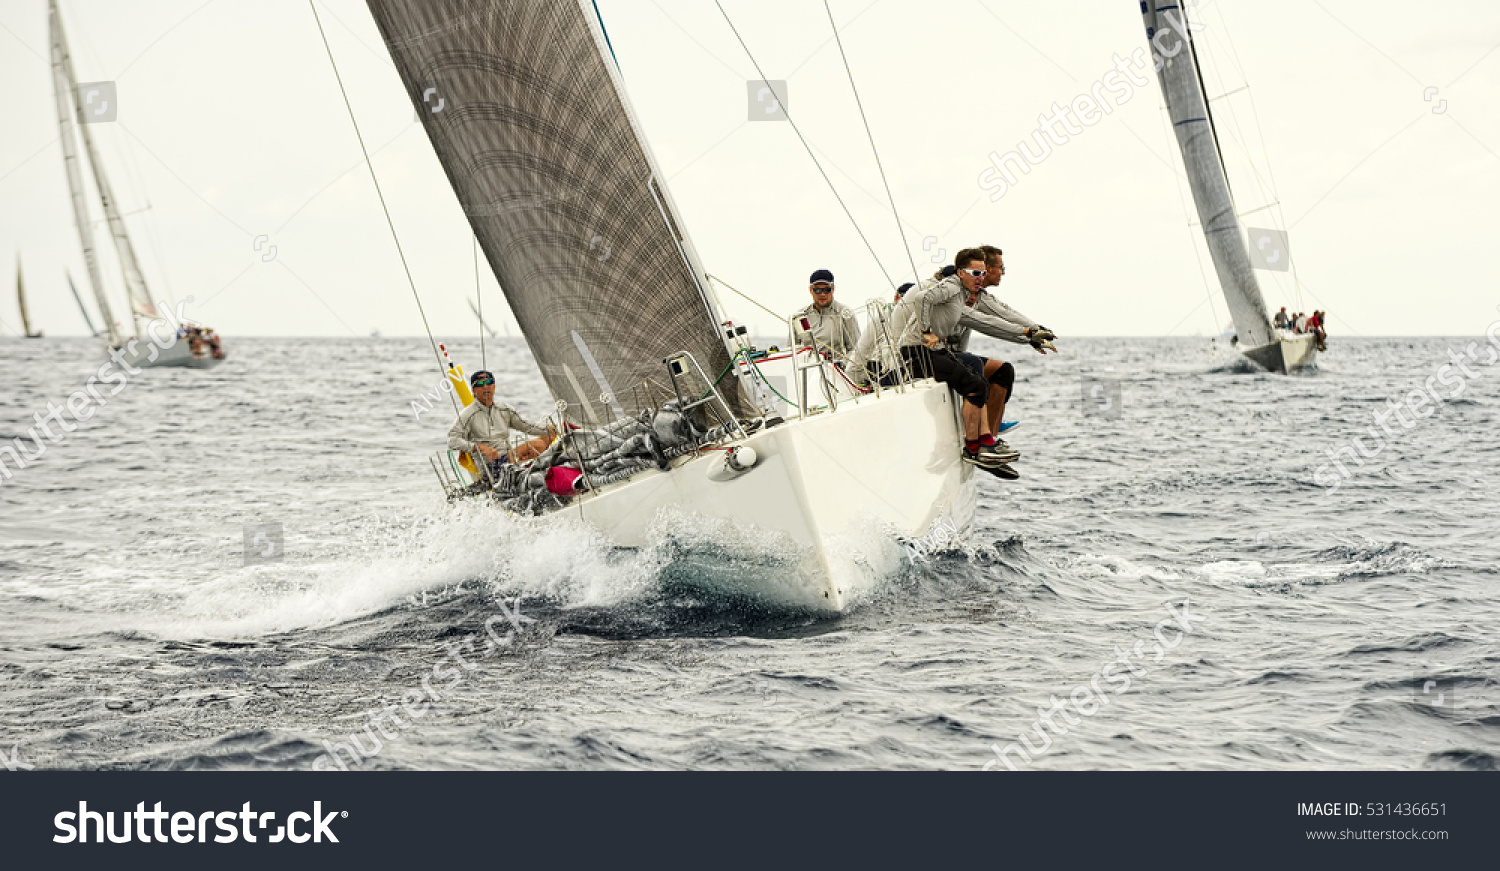  Sailing. Sailing yacht race. Yachting #531436651